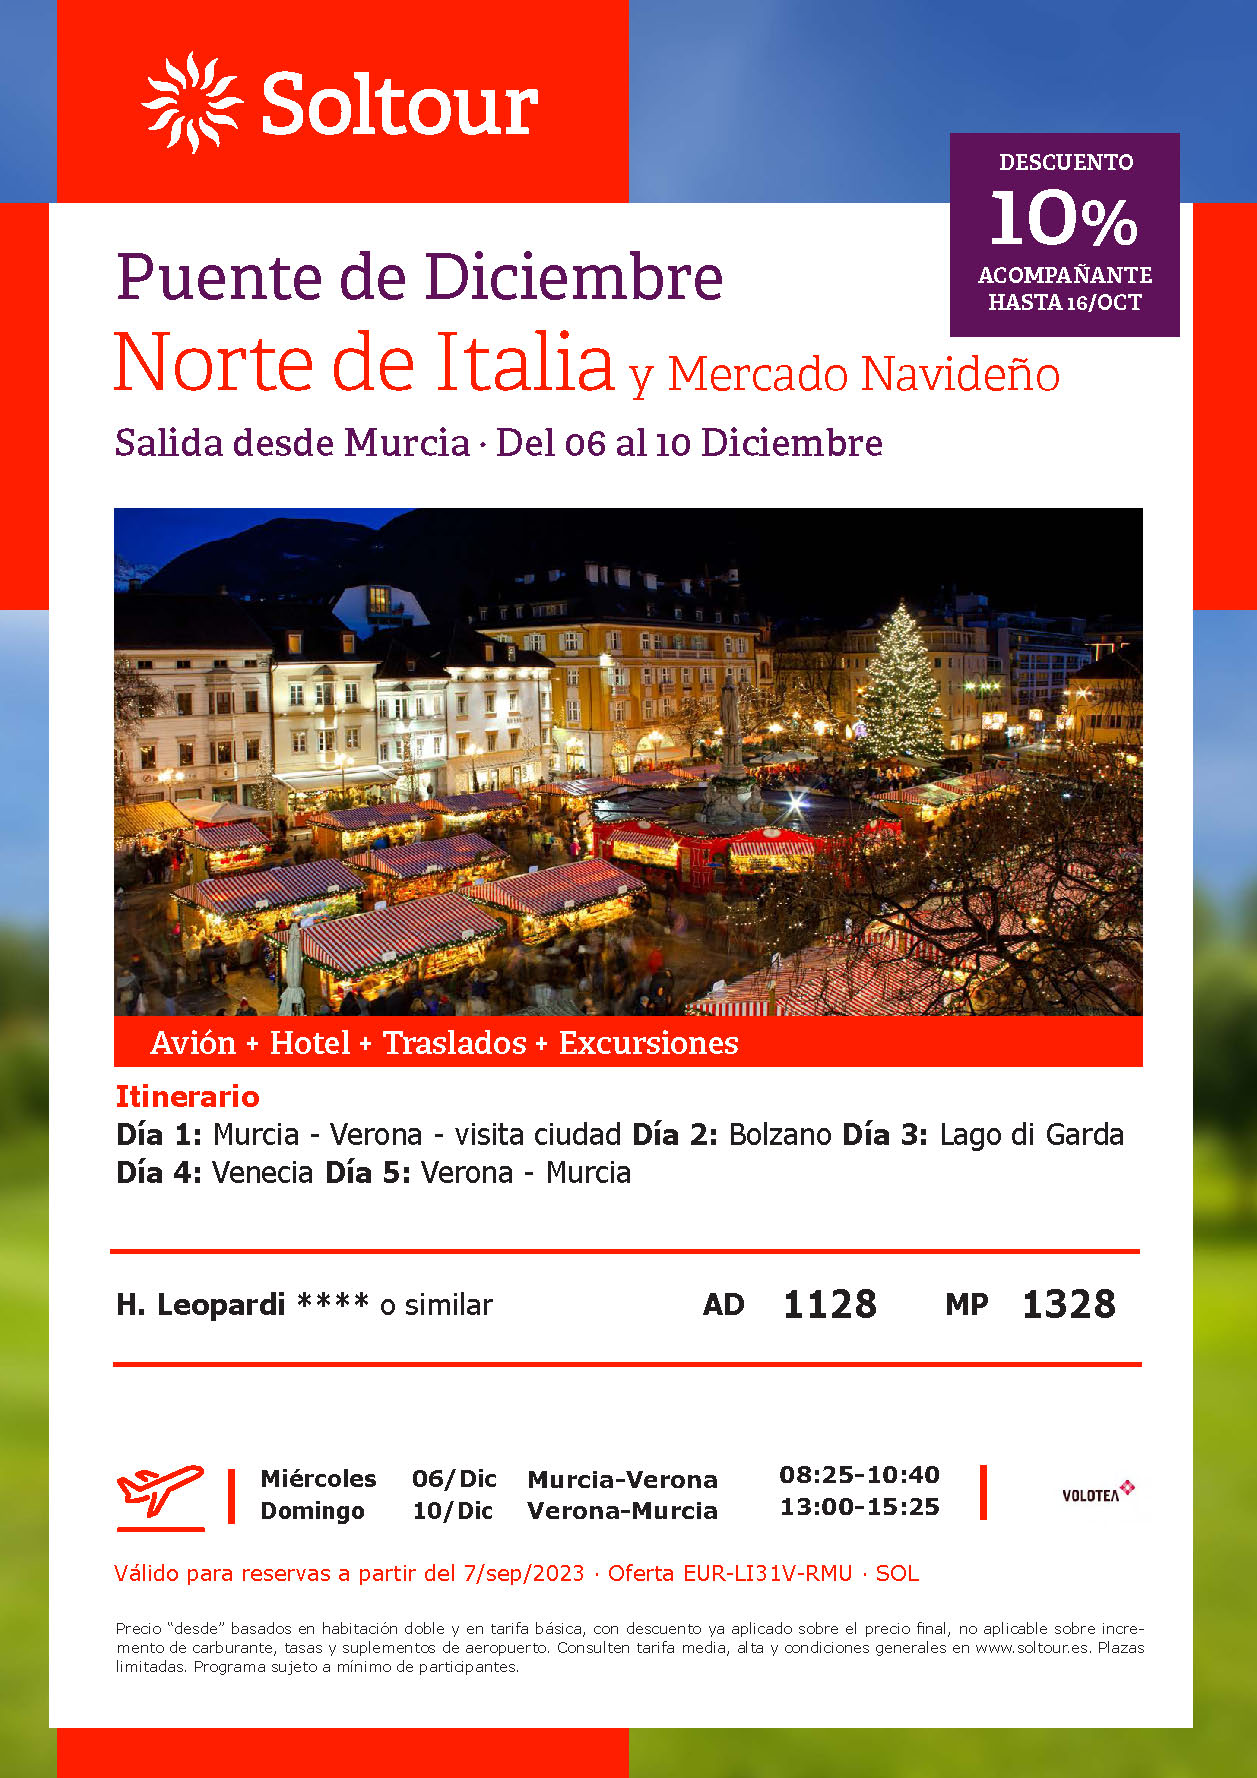 Oferta Soltour Puente de Diciembre 2023 Circuito Norte de Italia 5 dias salida 6 diciembre en vuelo directo desde Murcia